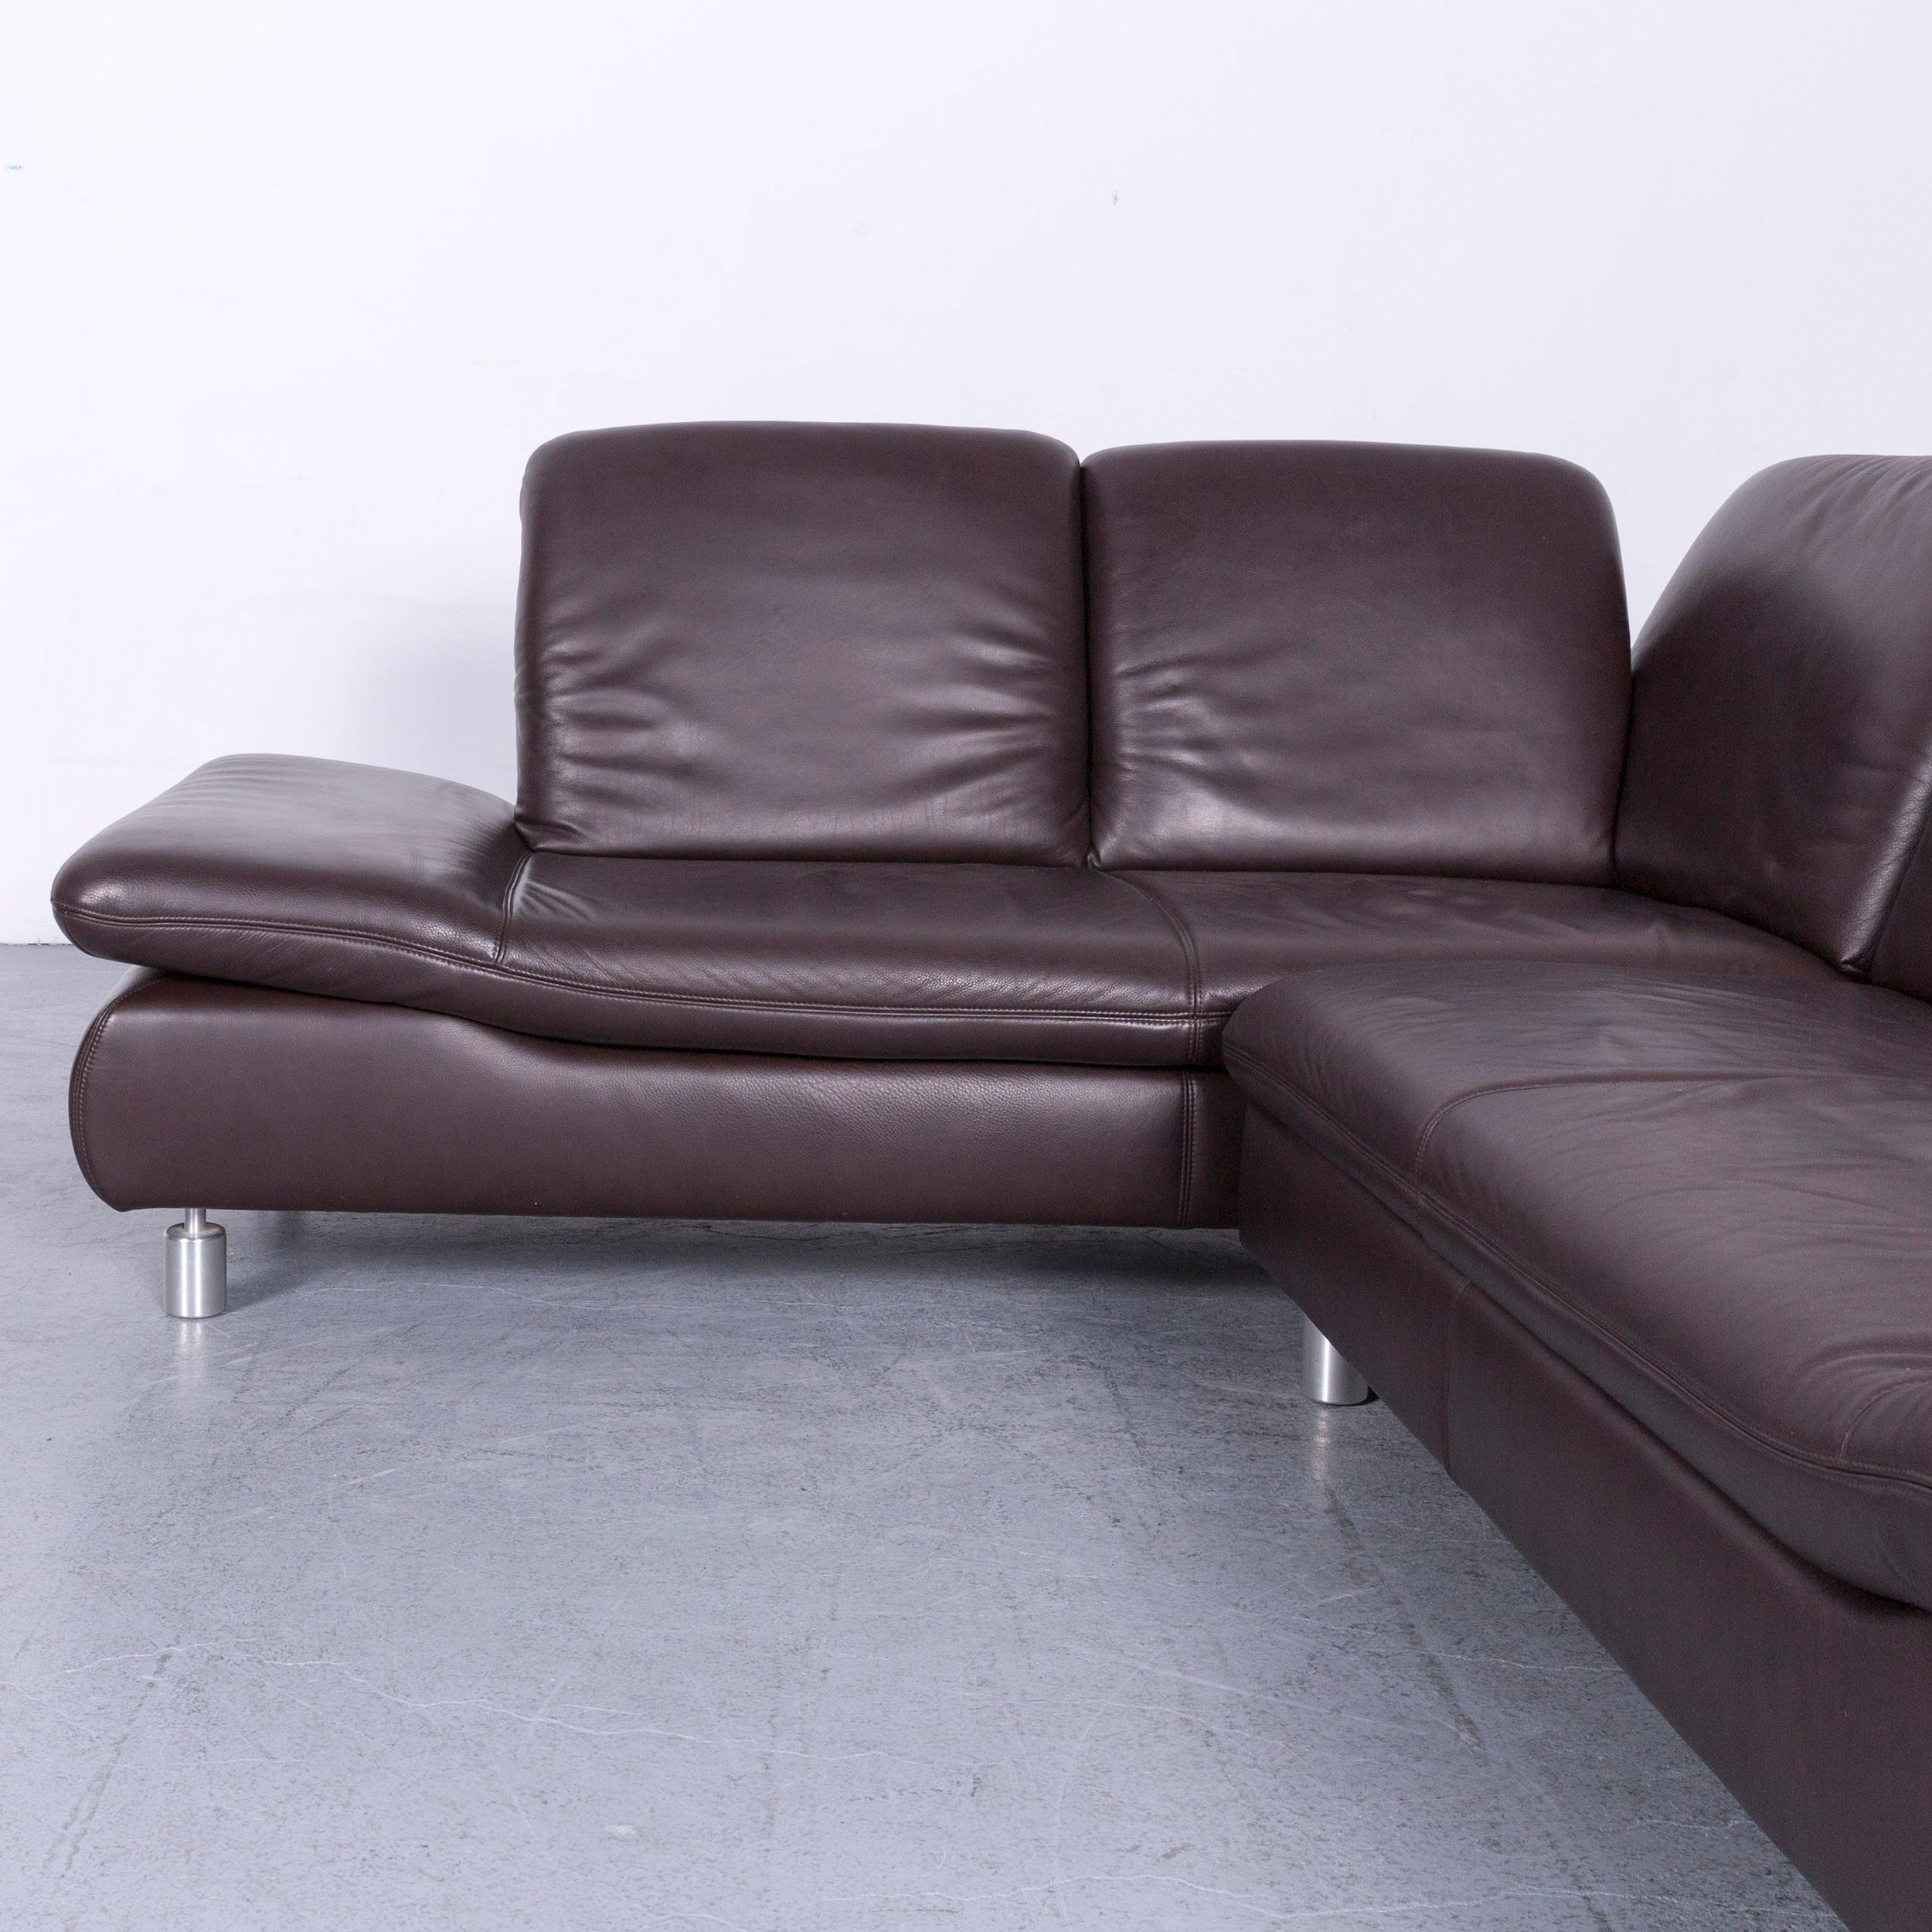 German Koinor Rivoli Designer Leather Corner Sofa in Brown with Functions